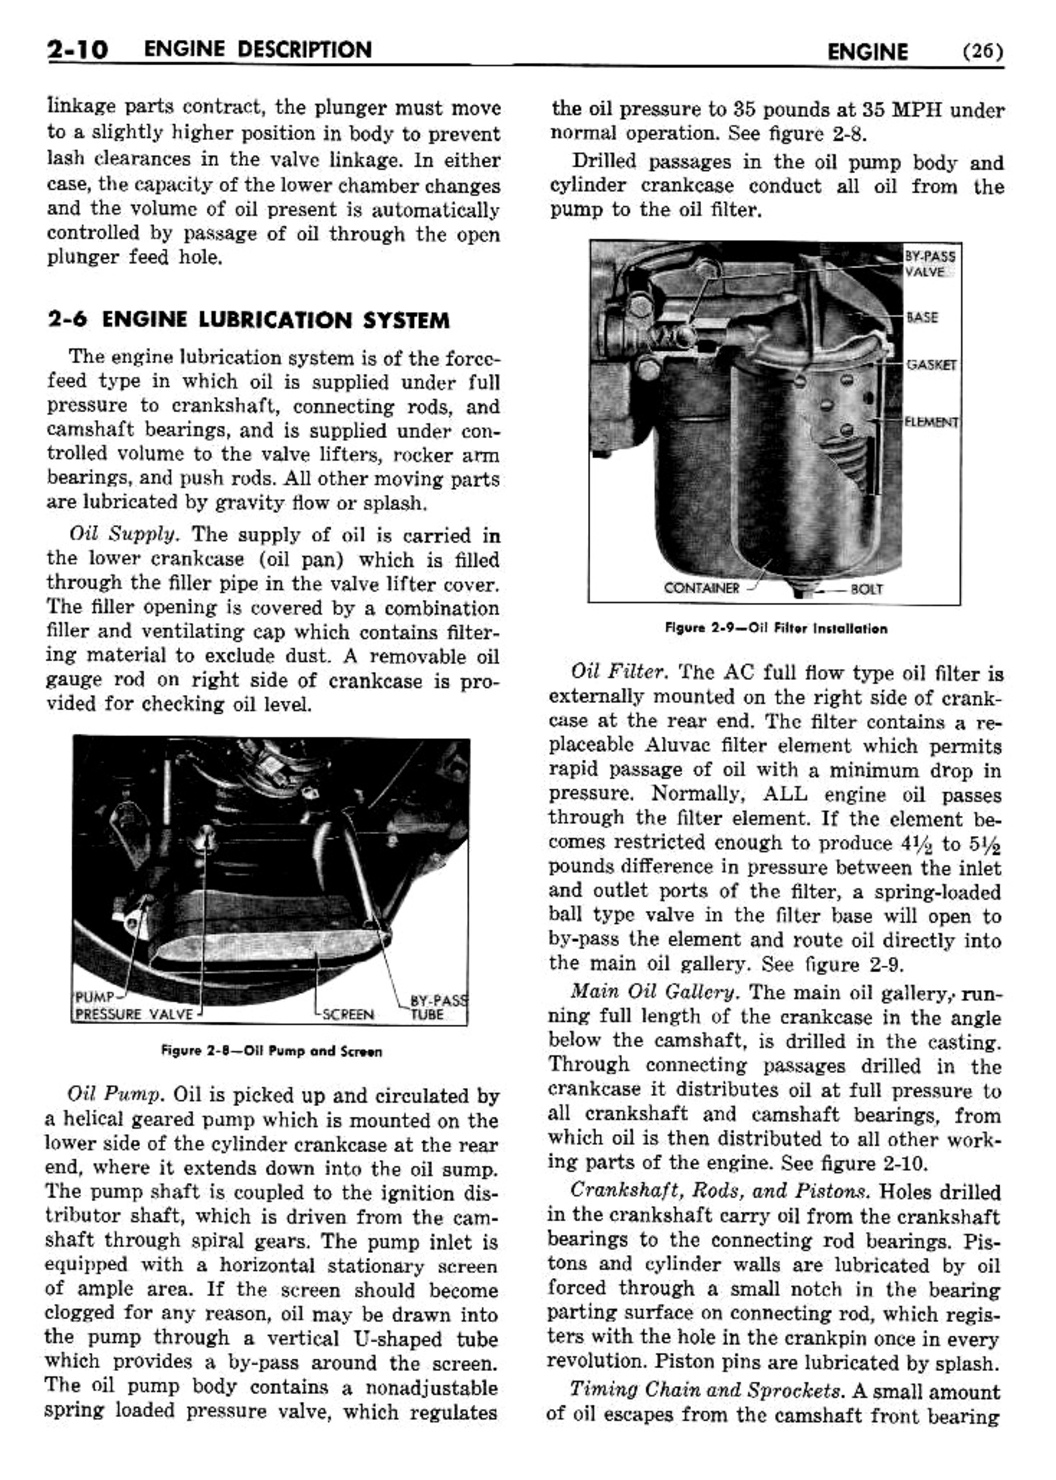 n_03 1954 Buick Shop Manual - Engine-010-010.jpg